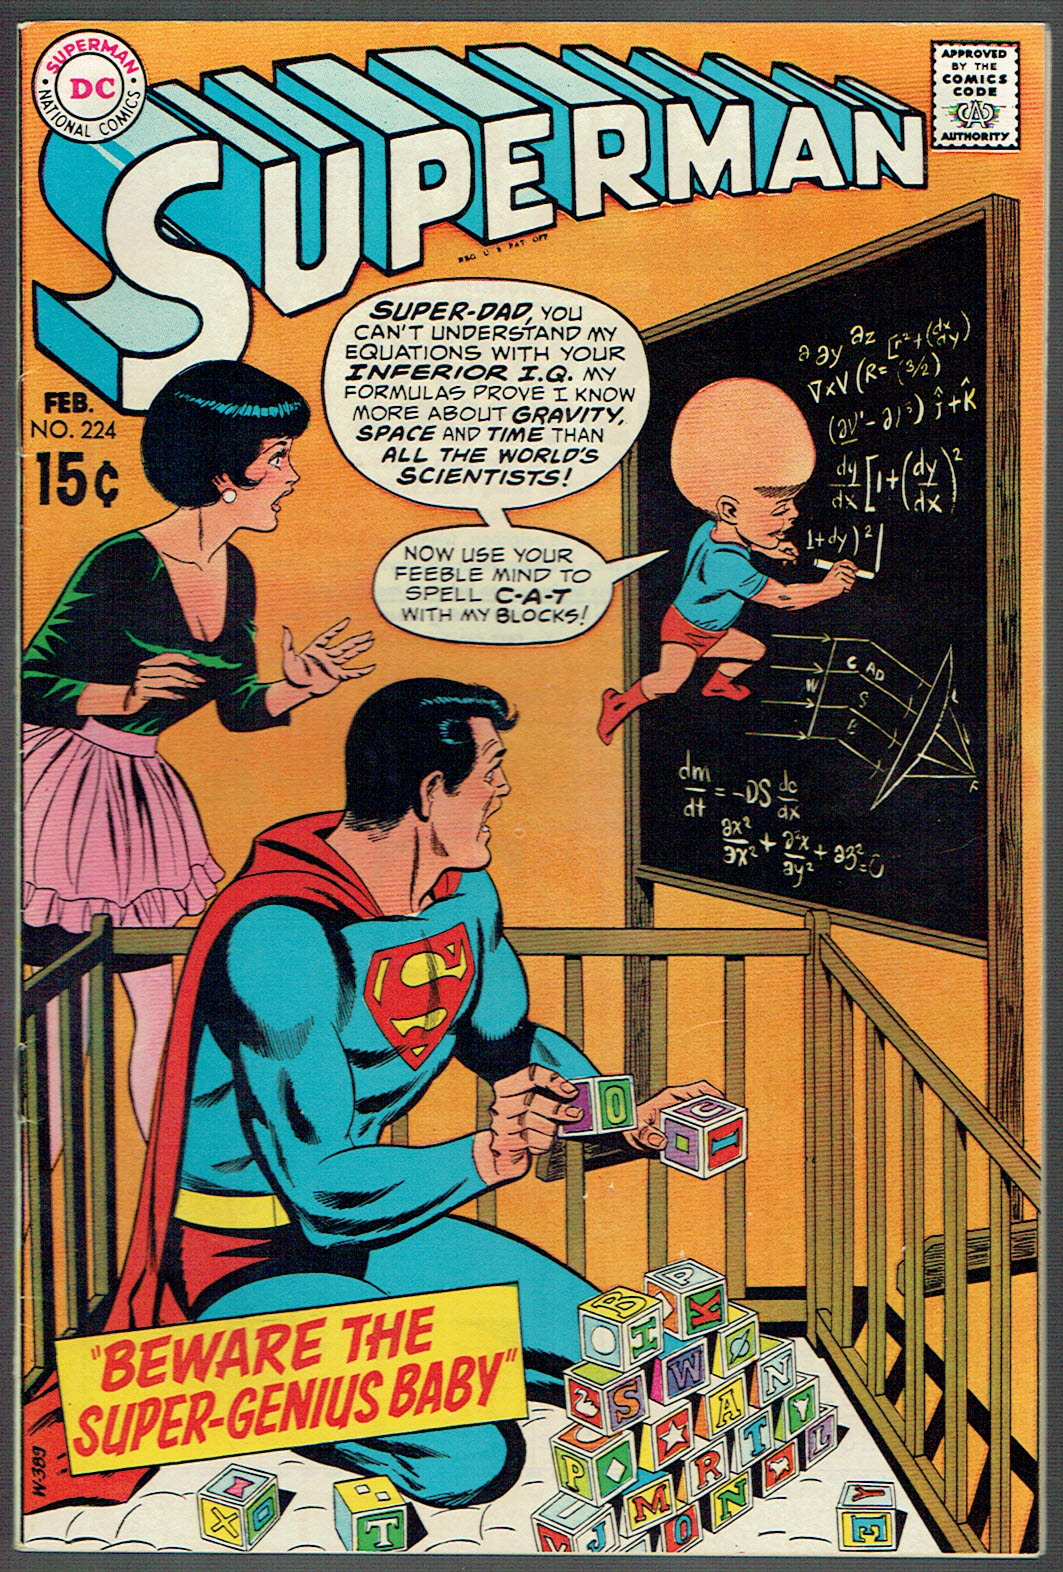 Superman #224